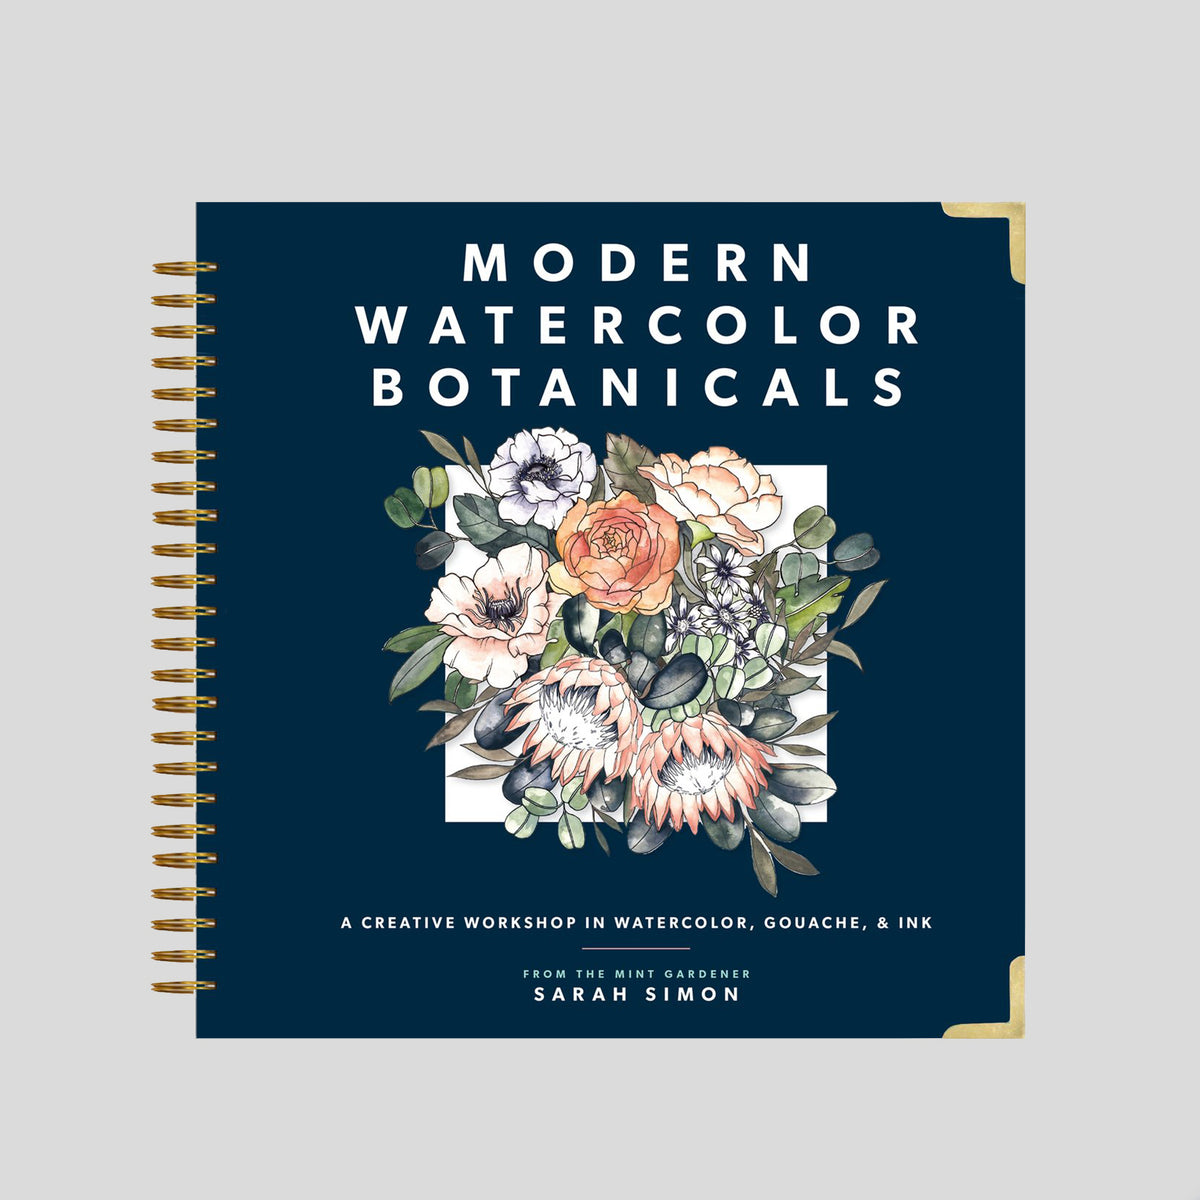 Modern Watercolor Botanicals' by Sarah Simon